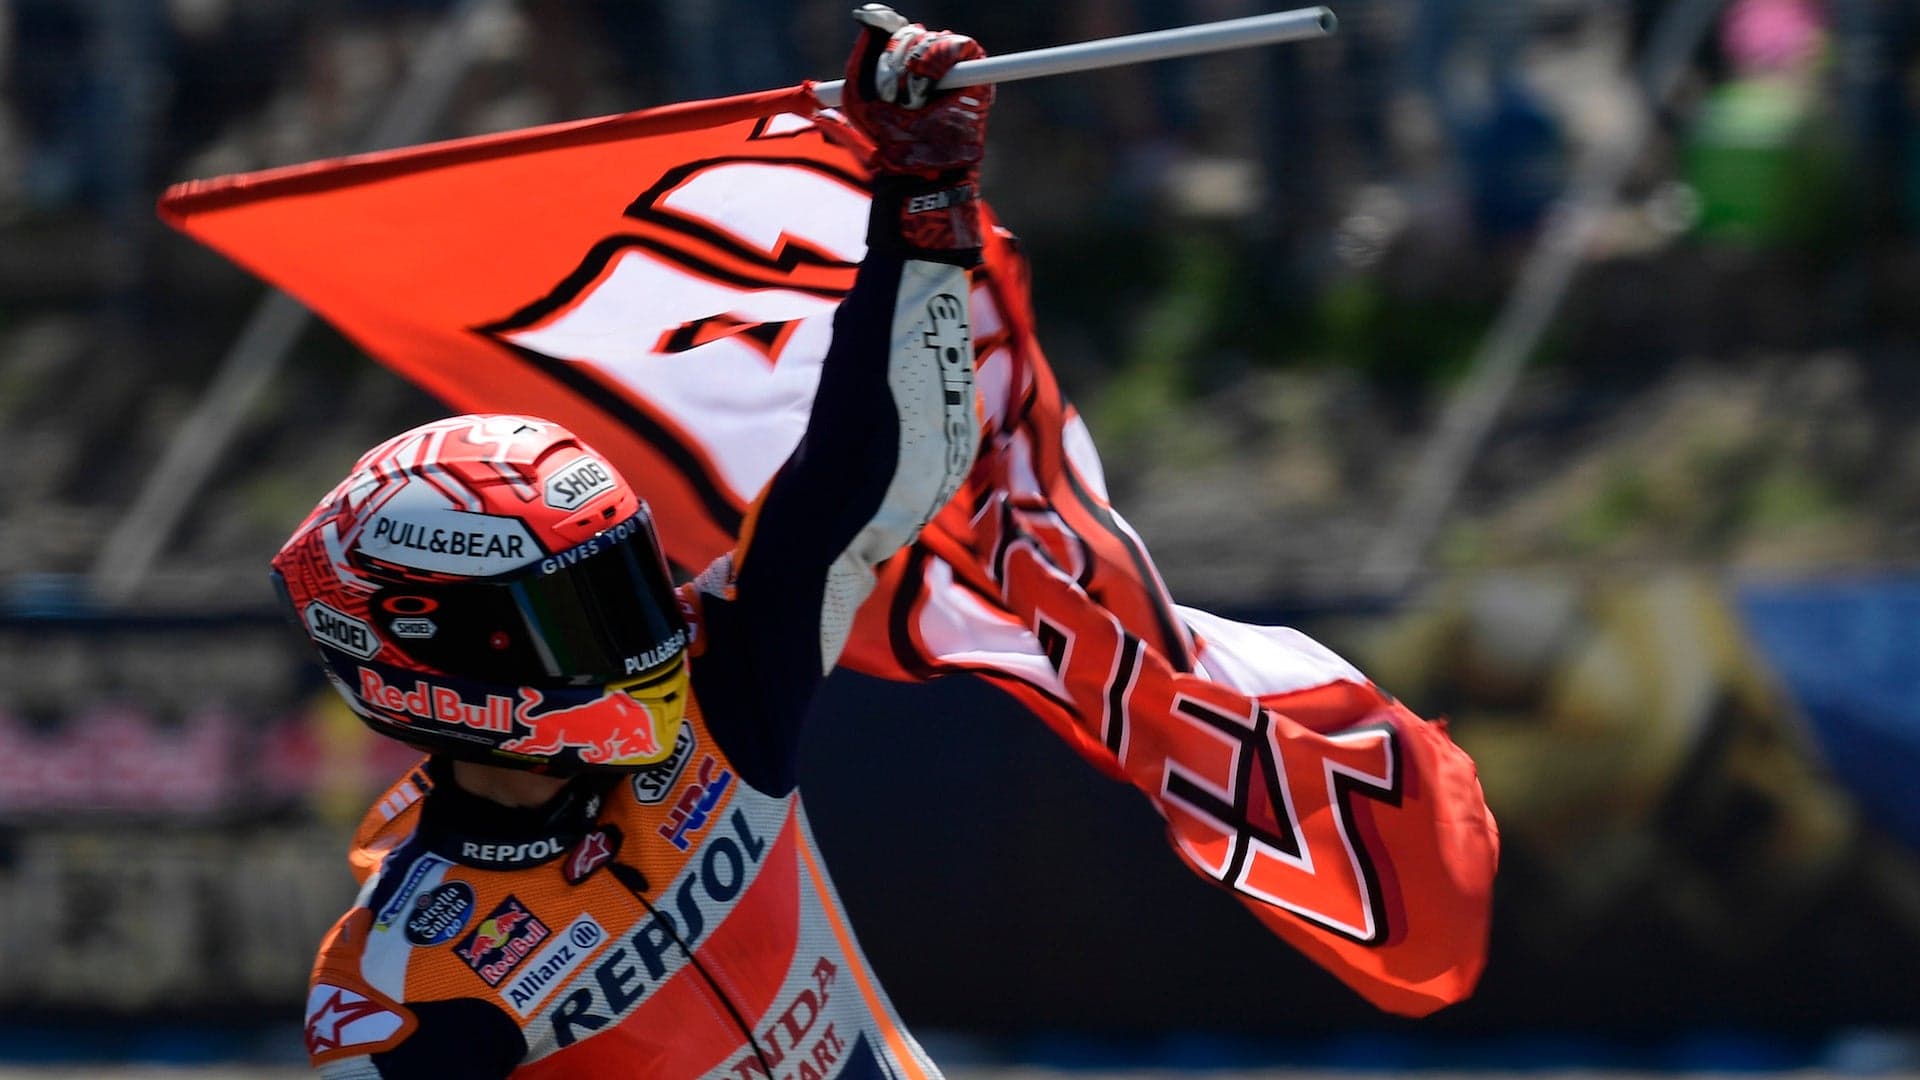 Marc Marquez Wins MotoGP Grand Prix of Spain as His Competitors Collide